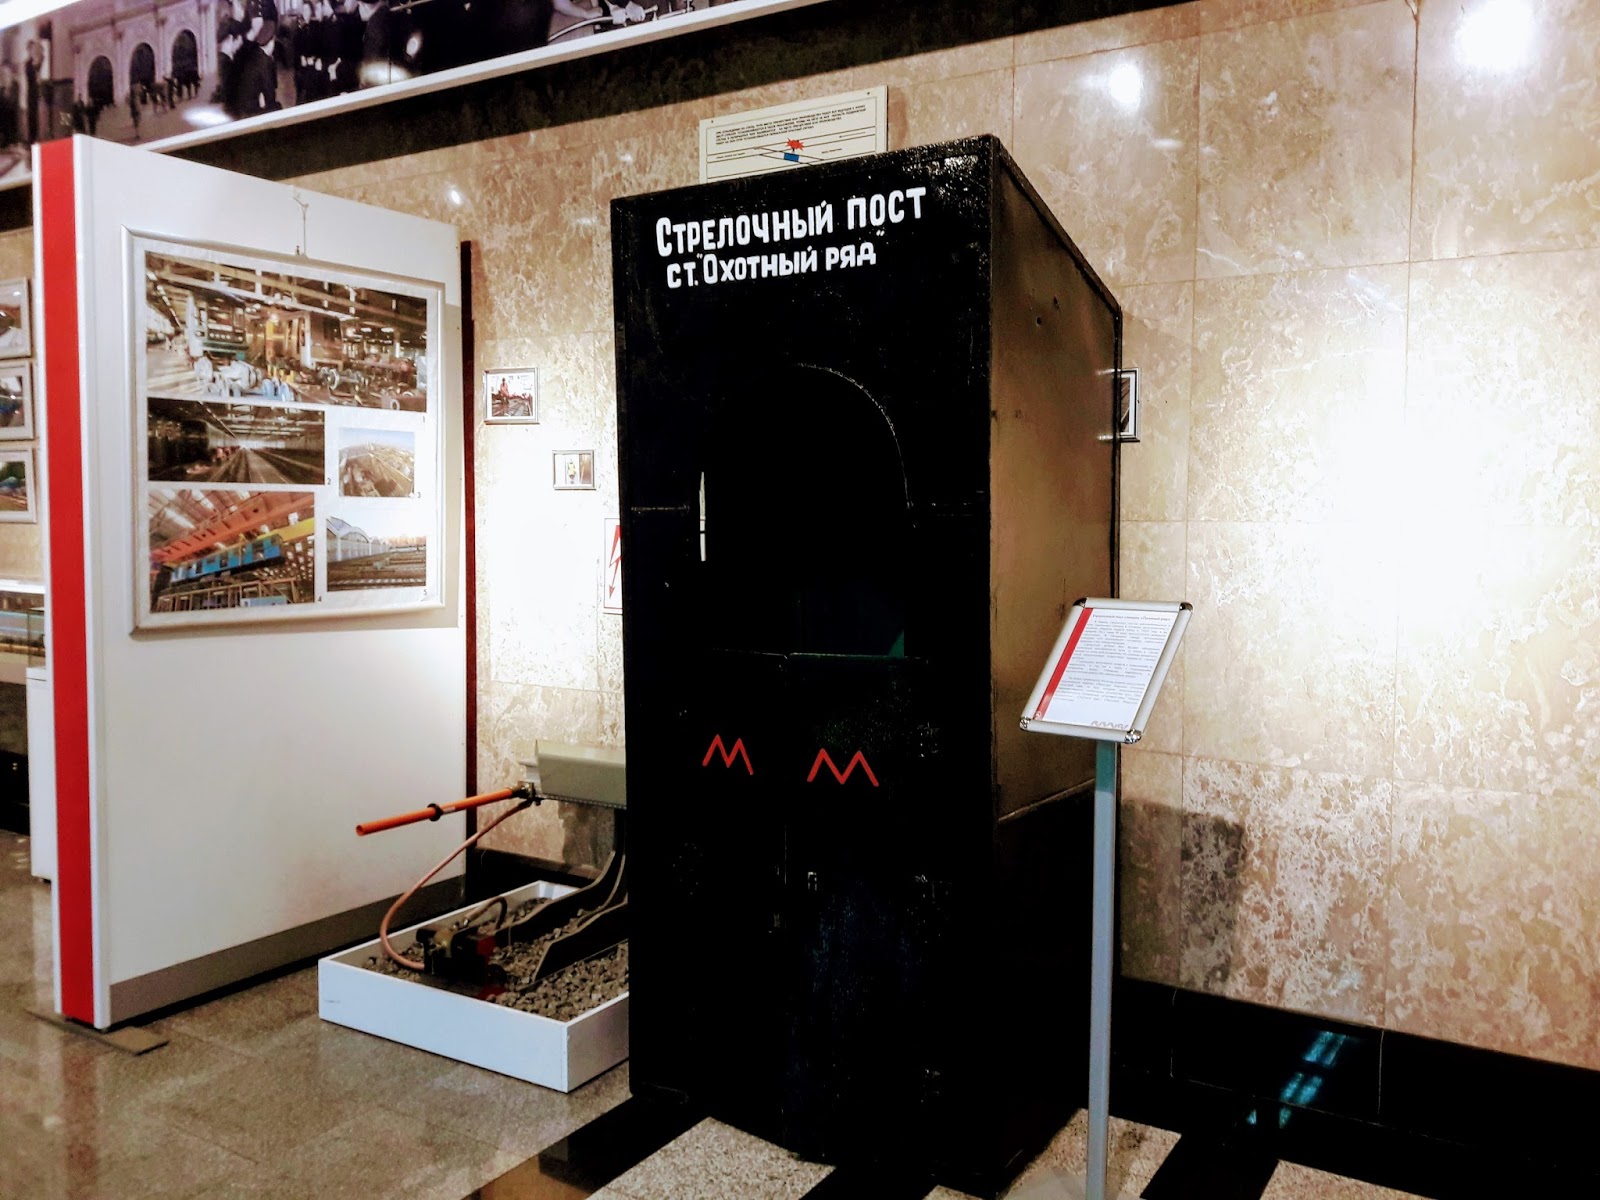 Музей метро москва